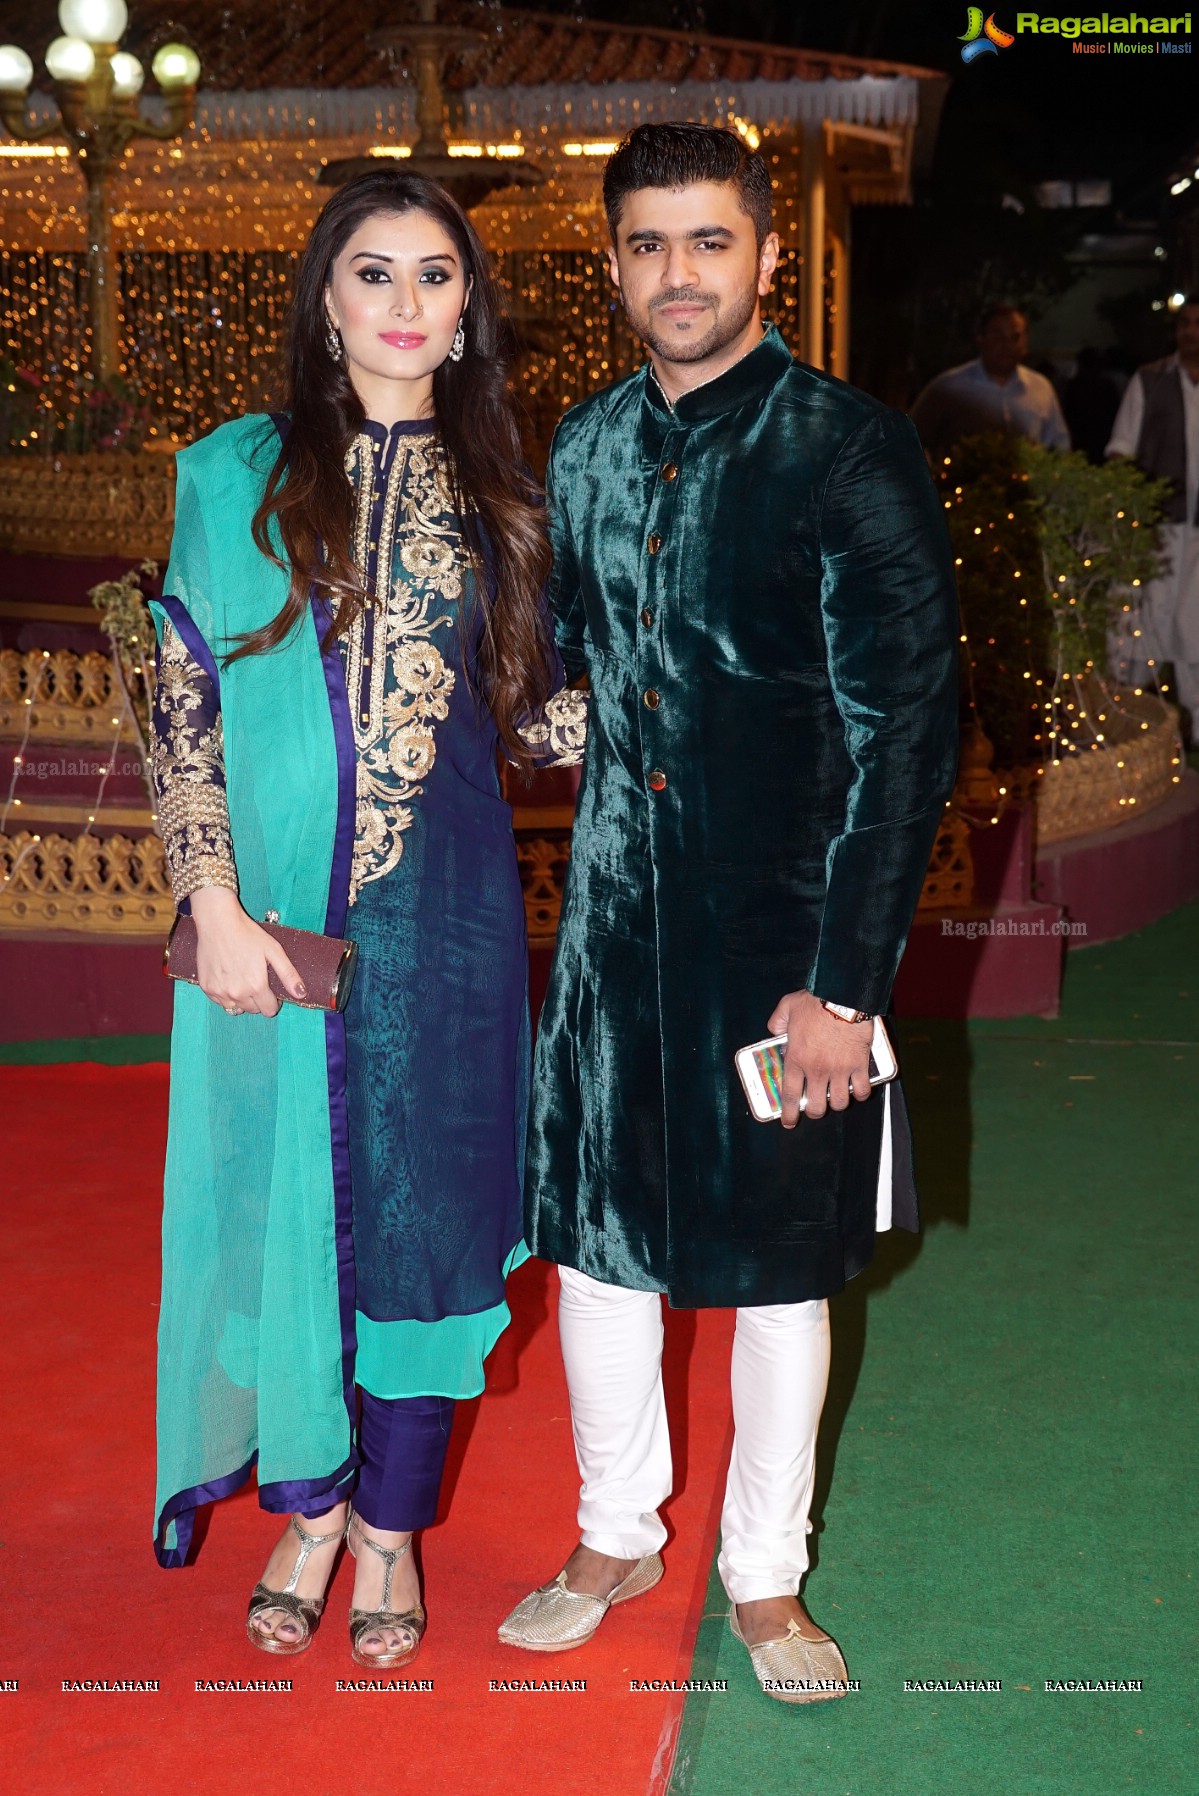 Sanchak and Mehendi of Aamer Javeed - Ruba Khan at Paigah Palace, Hyderabad